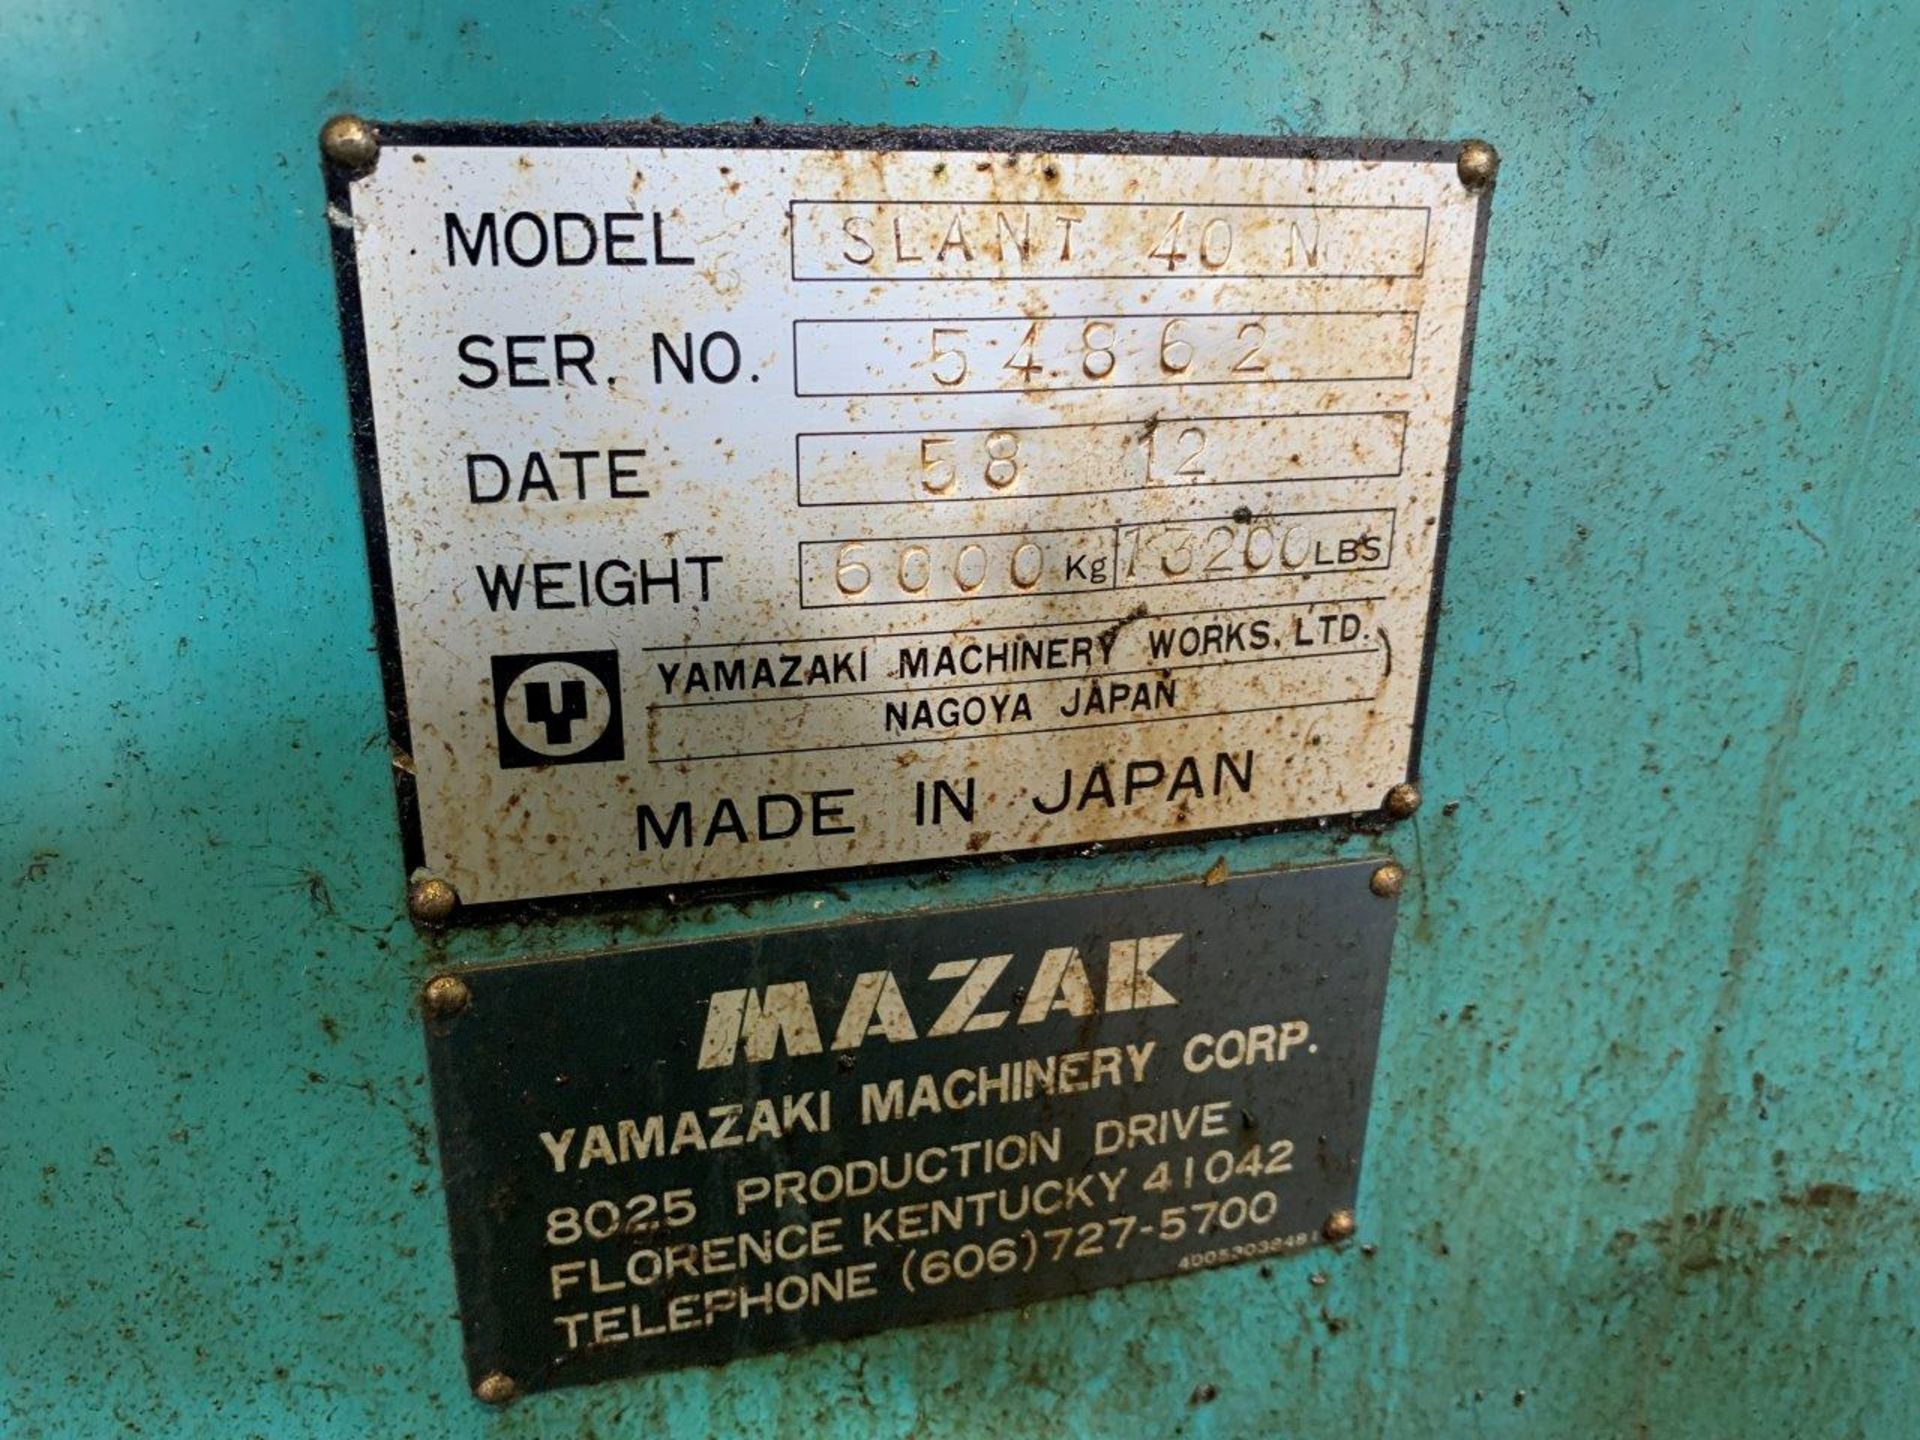 1983 MAZAK SLANT TURN 40N LATHE CNC, 14“ DIAMETER., S/N 54862 - Image 16 of 27